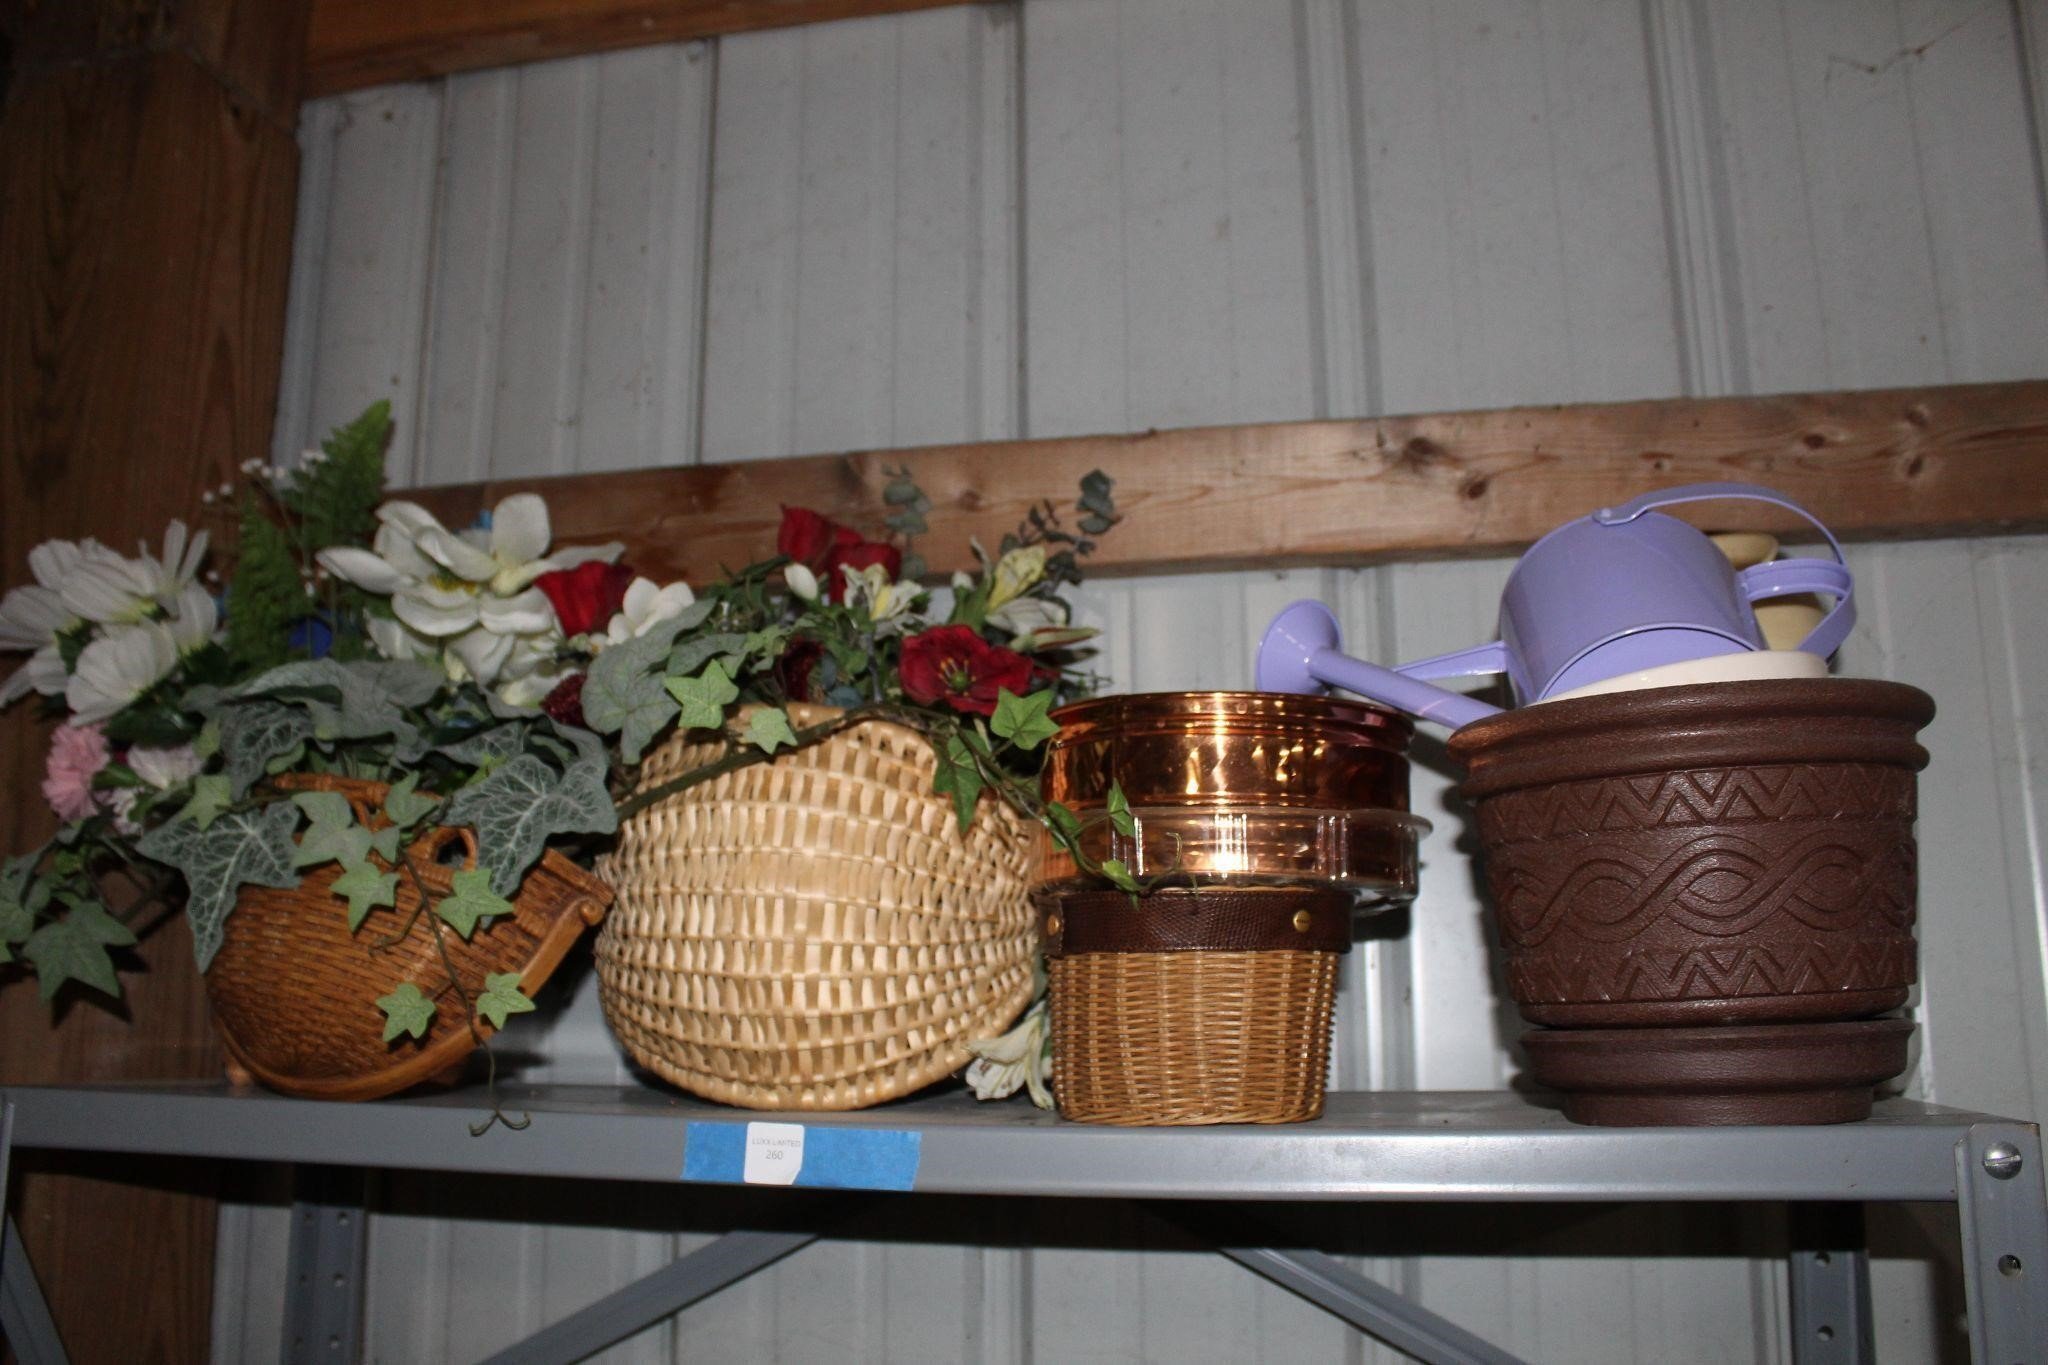 Shelf of Pots/Fake Plants and Baskets